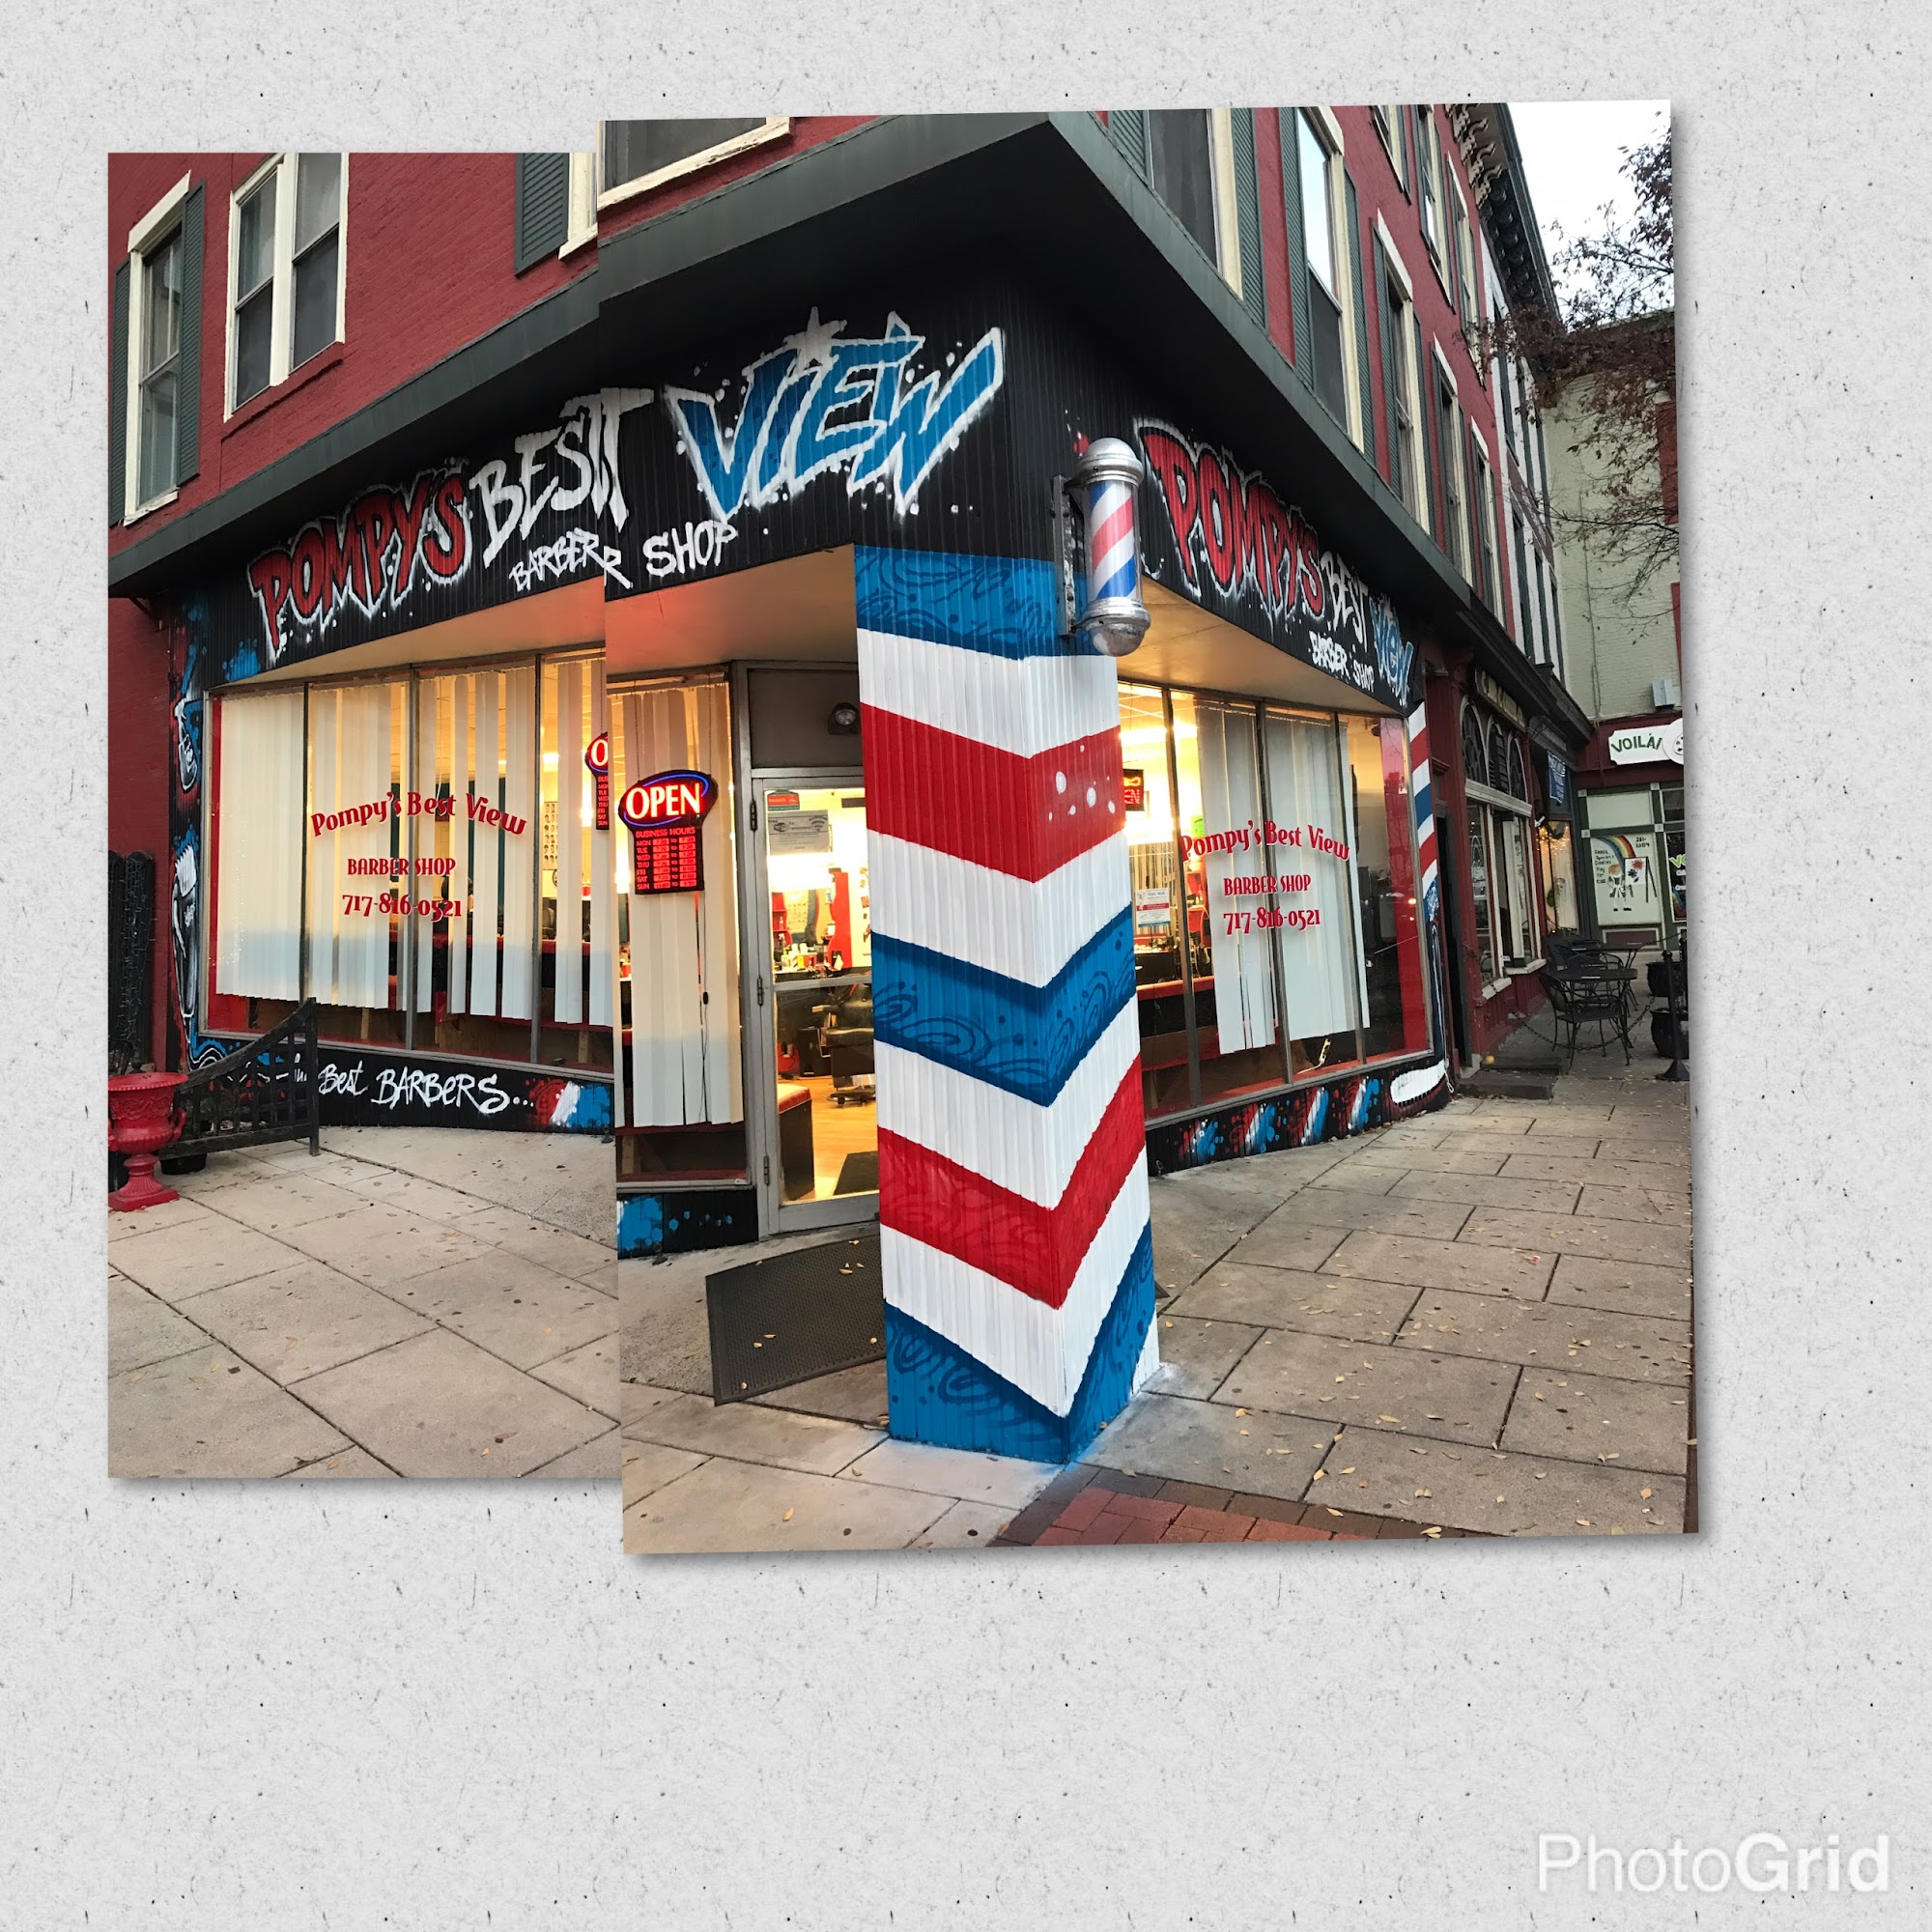 Pompy's Best View Barber Shop